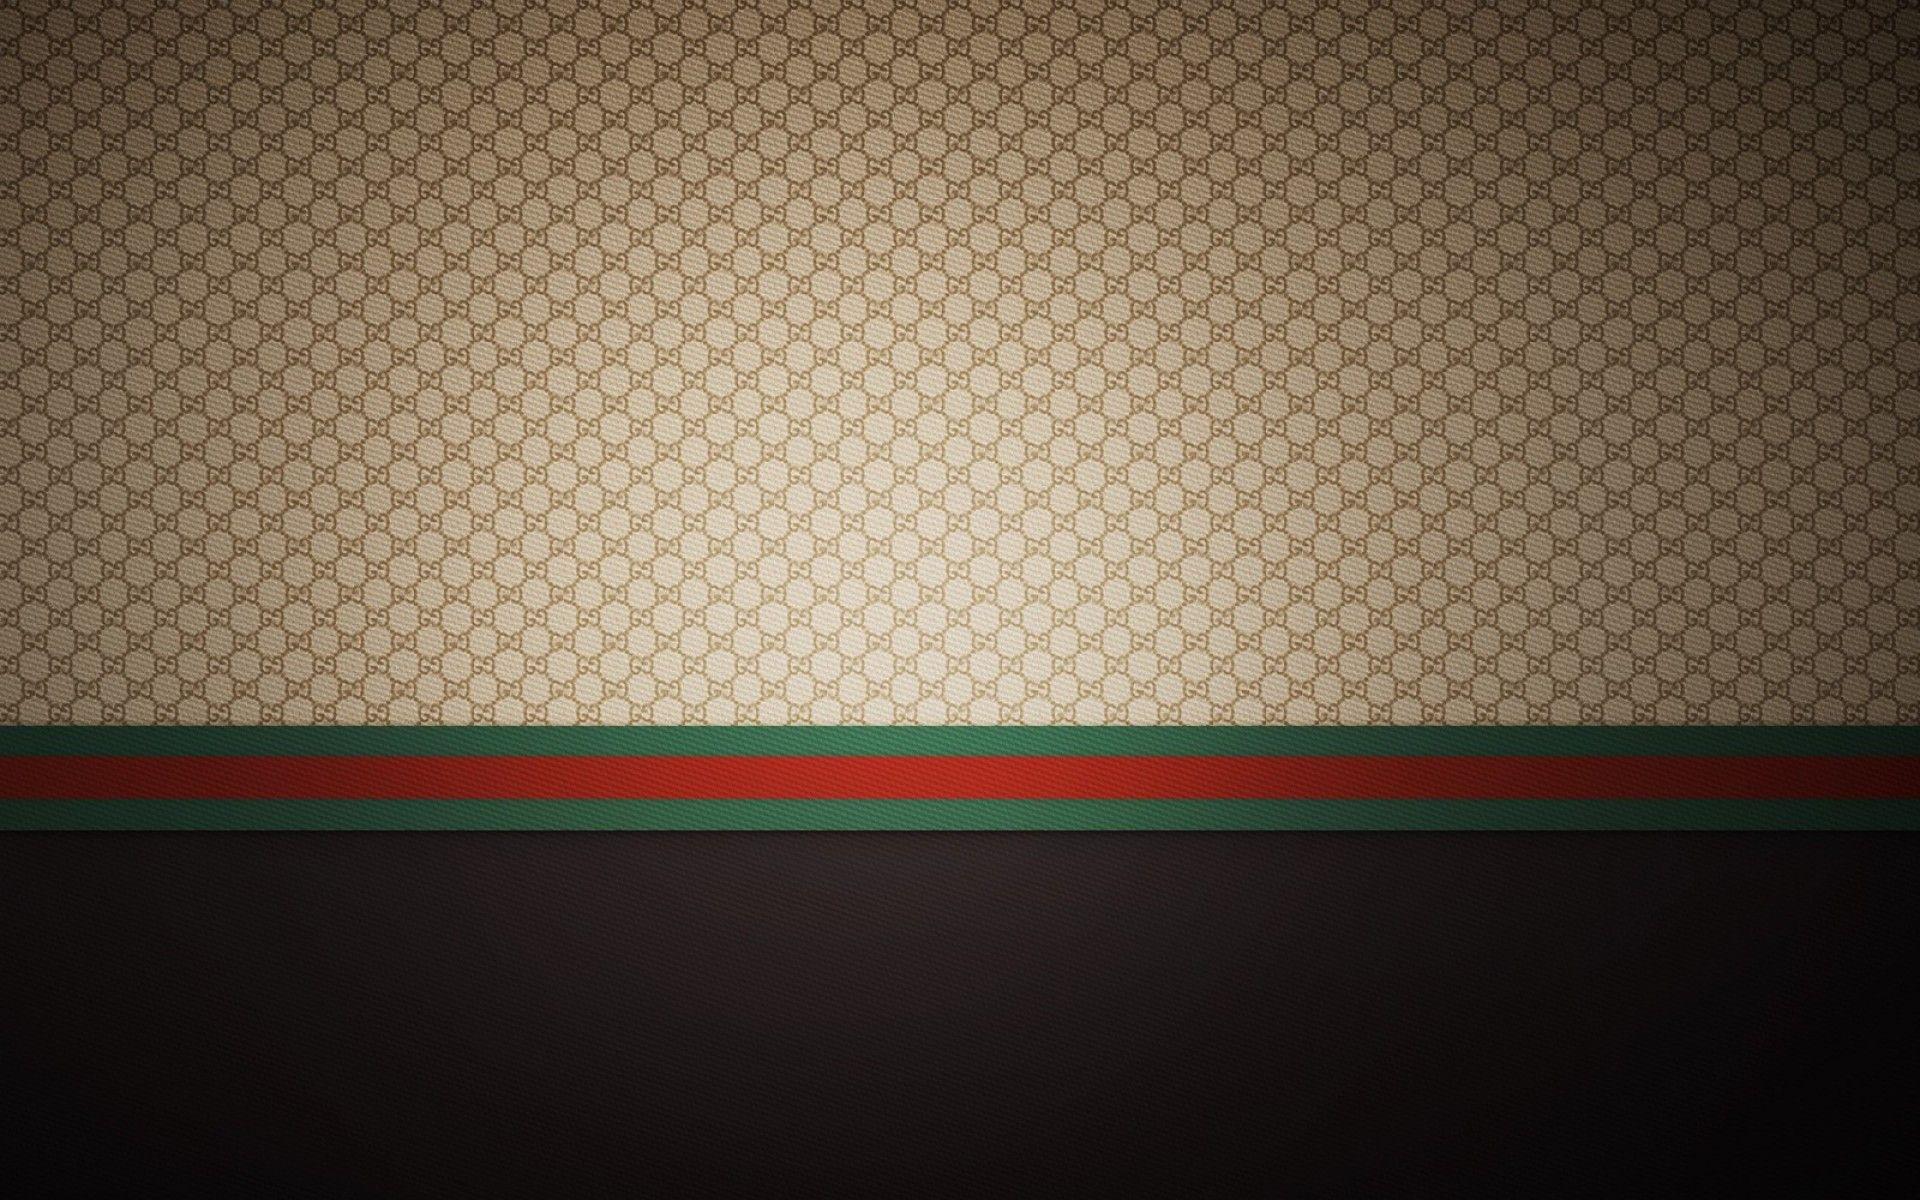 Gucci designer label patterns wall wallpaper HD. Design